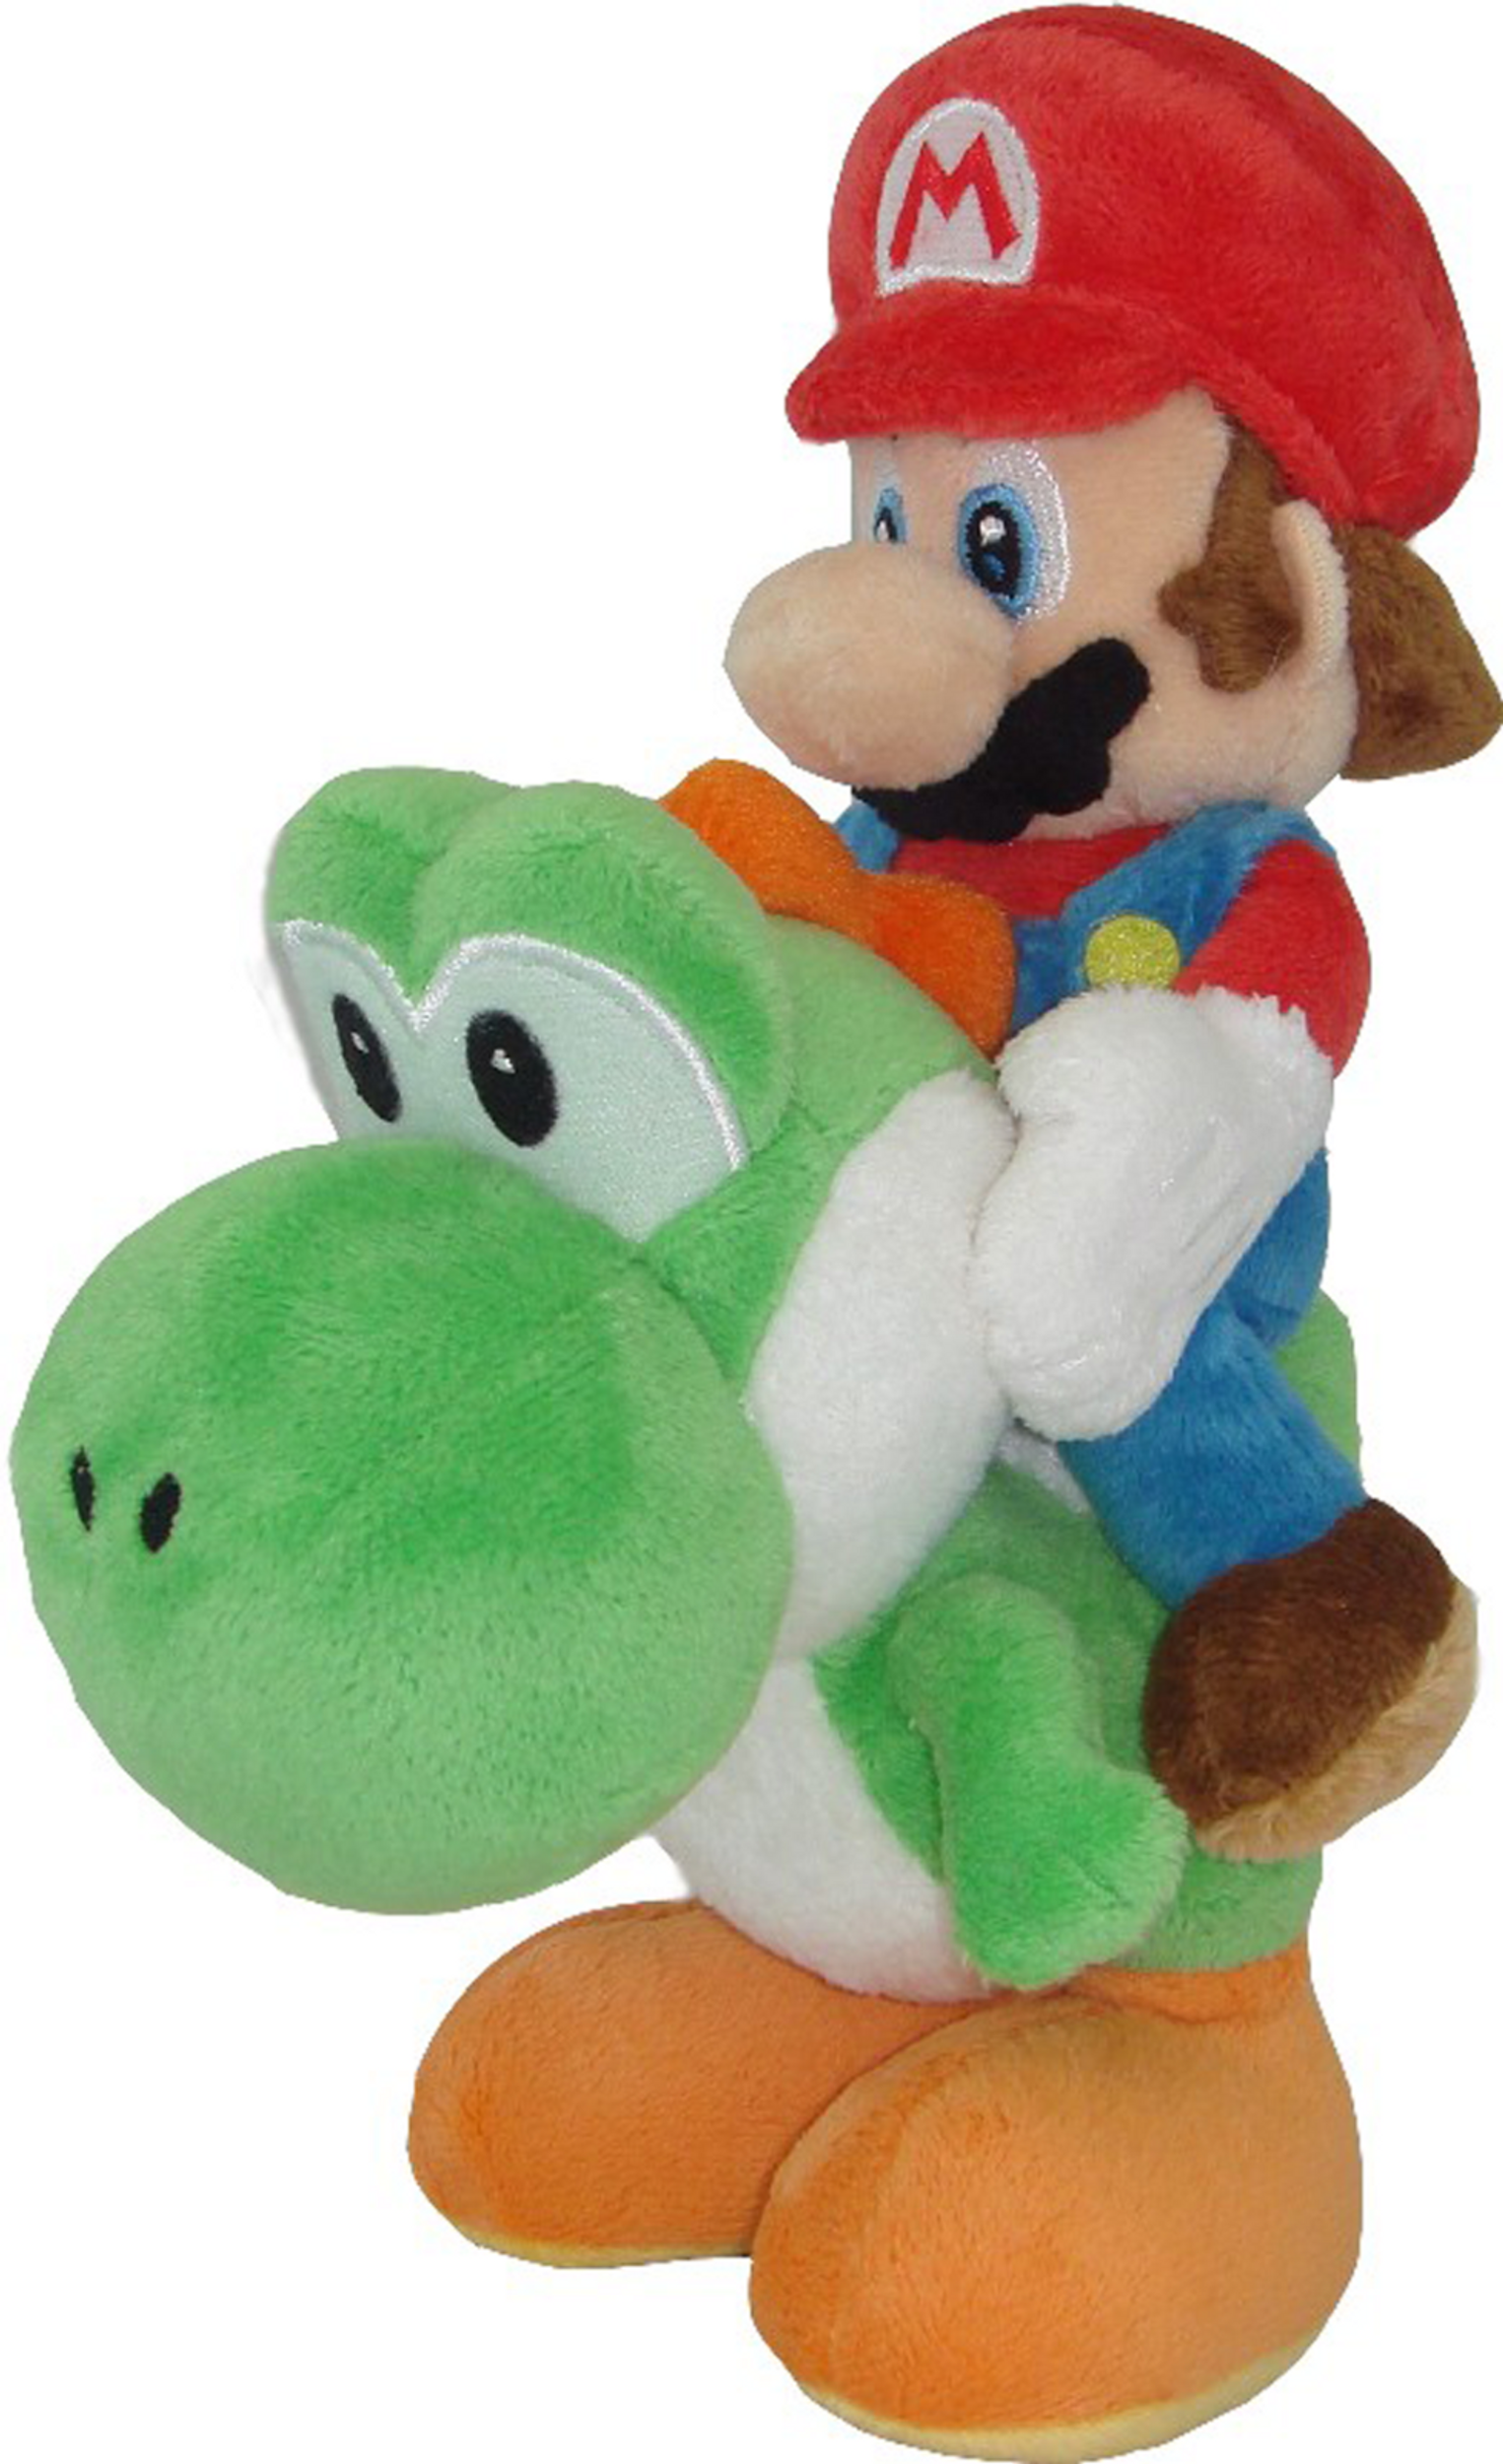 Mario NINTENDO & Yoshi Plüschfigur